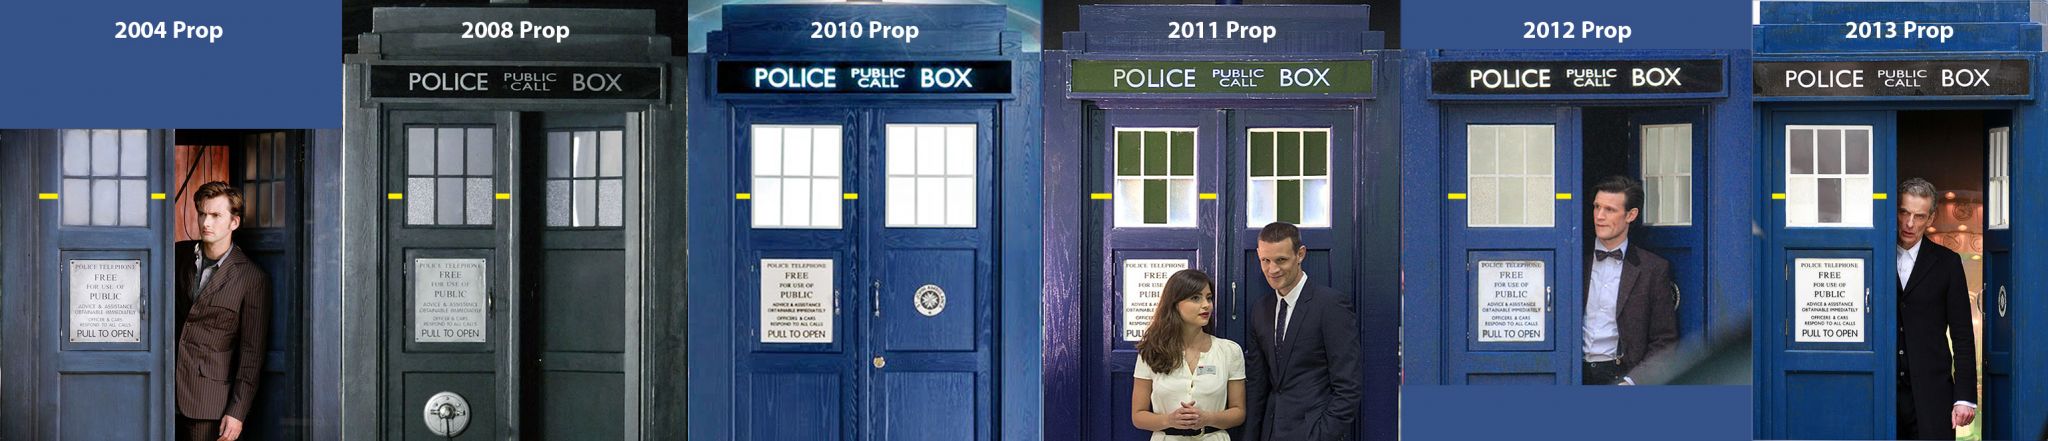 New Series TARDIS Front Doors Comparison.jpg